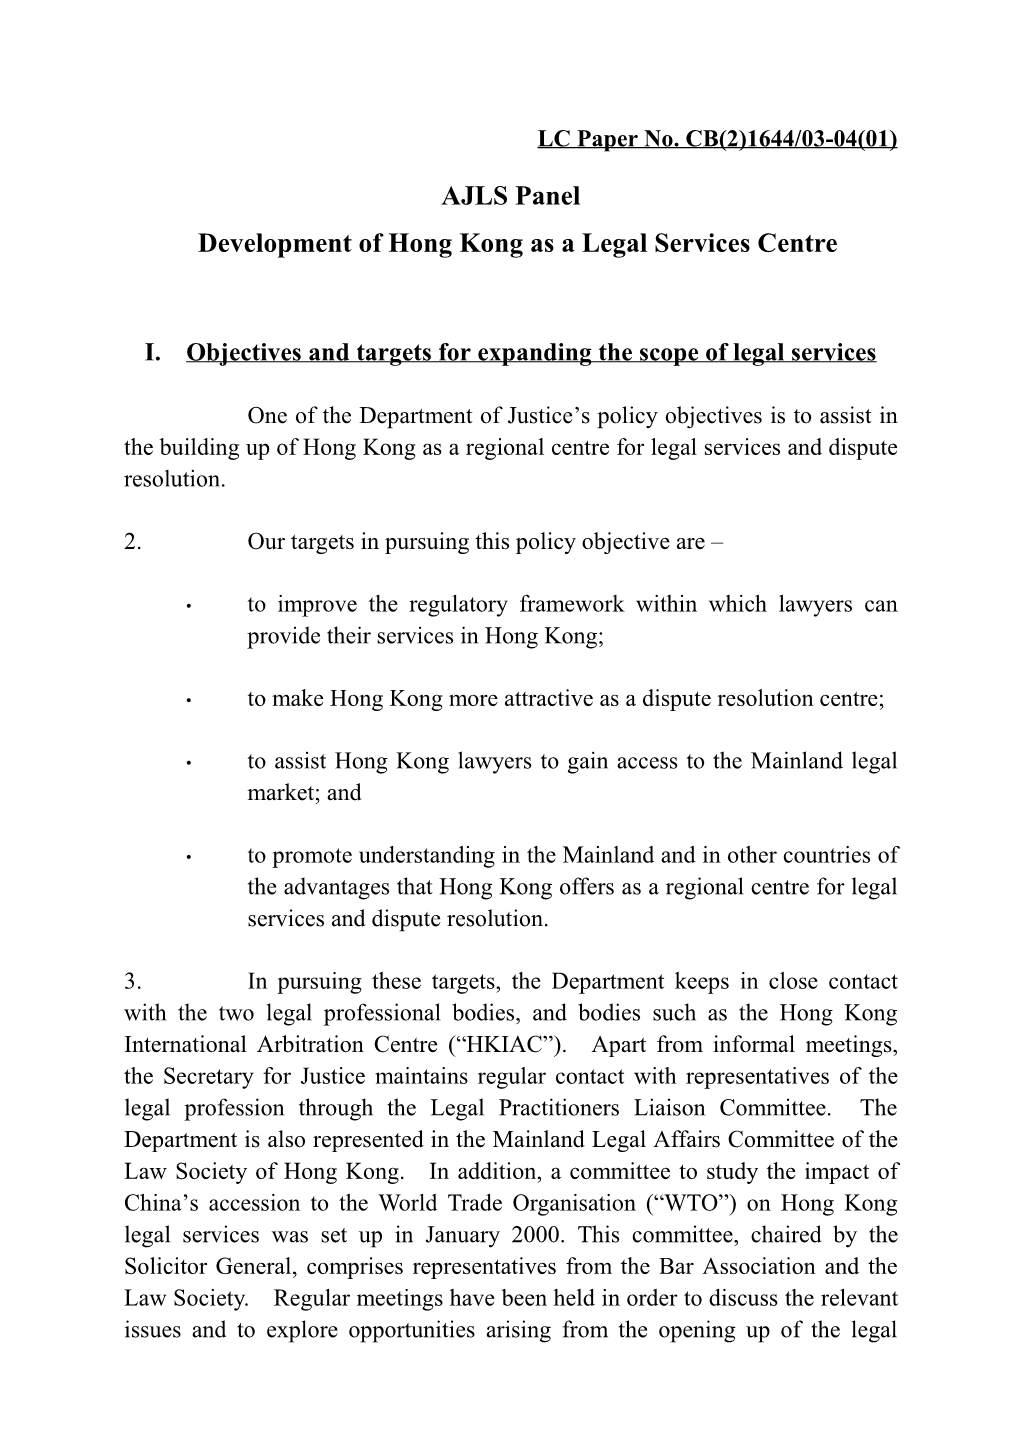 AJLS Panel Development of Hong Kong As a Legal Services Centre